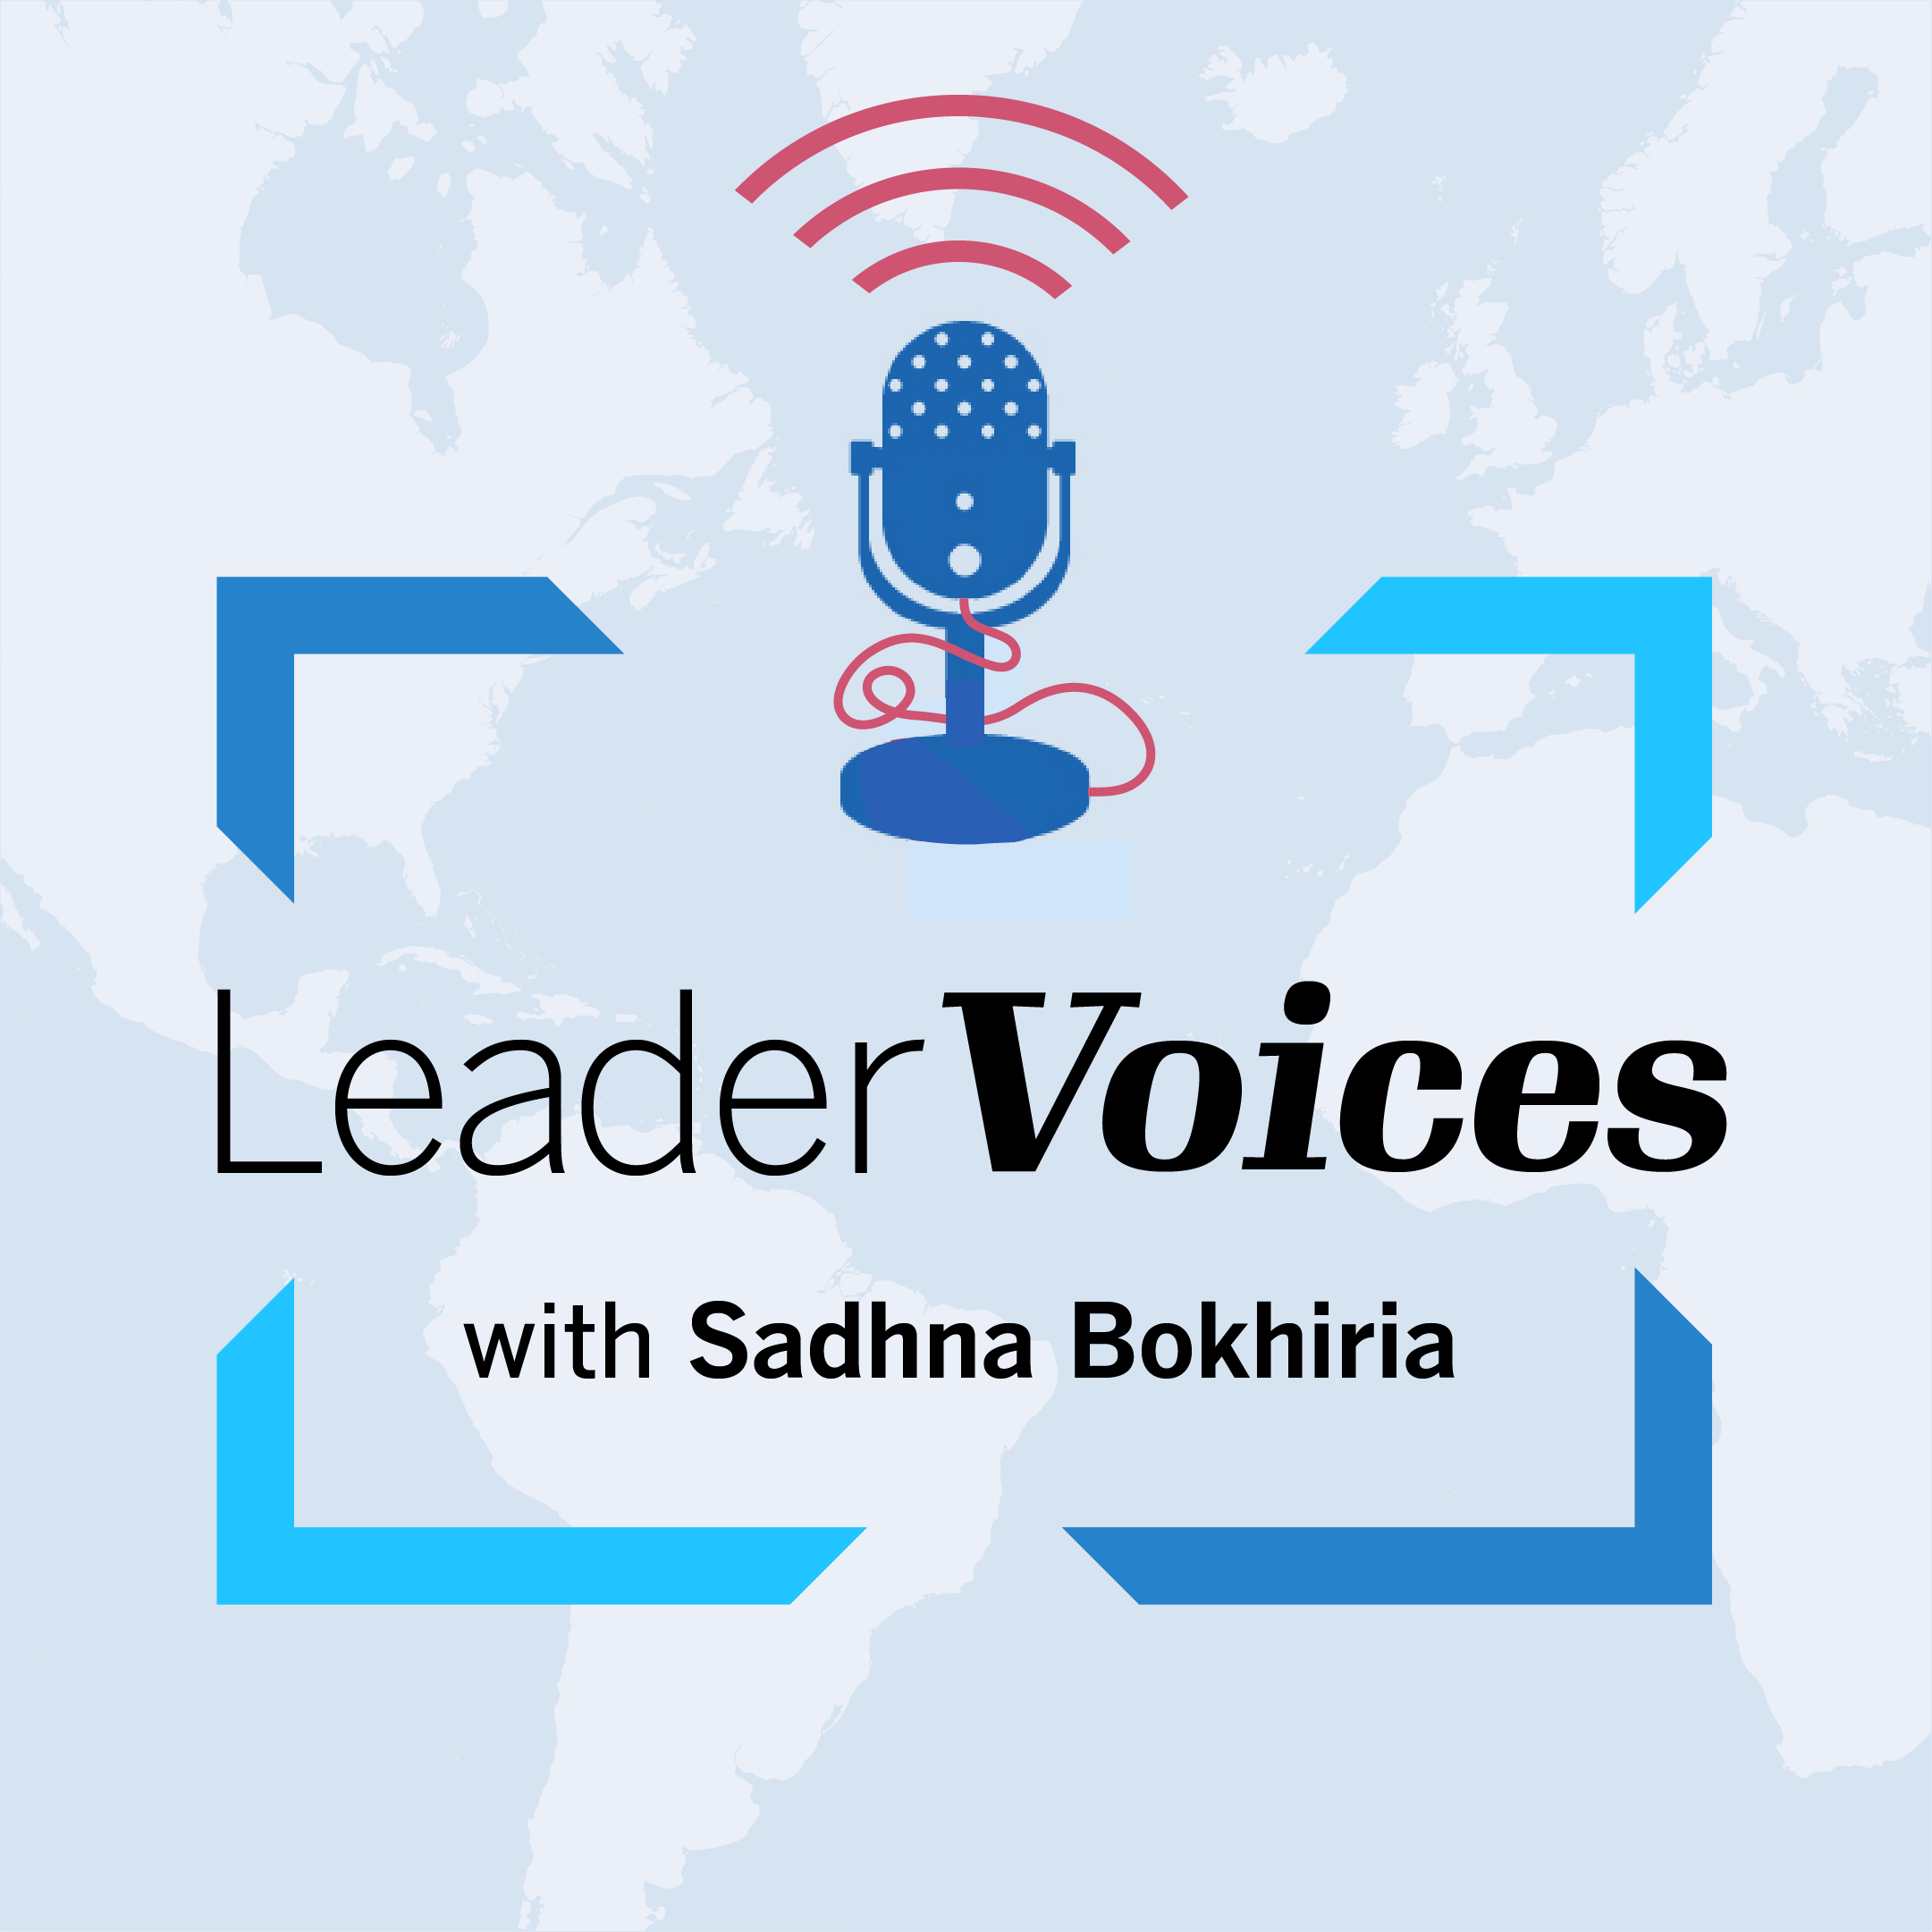 leadervoices_logo